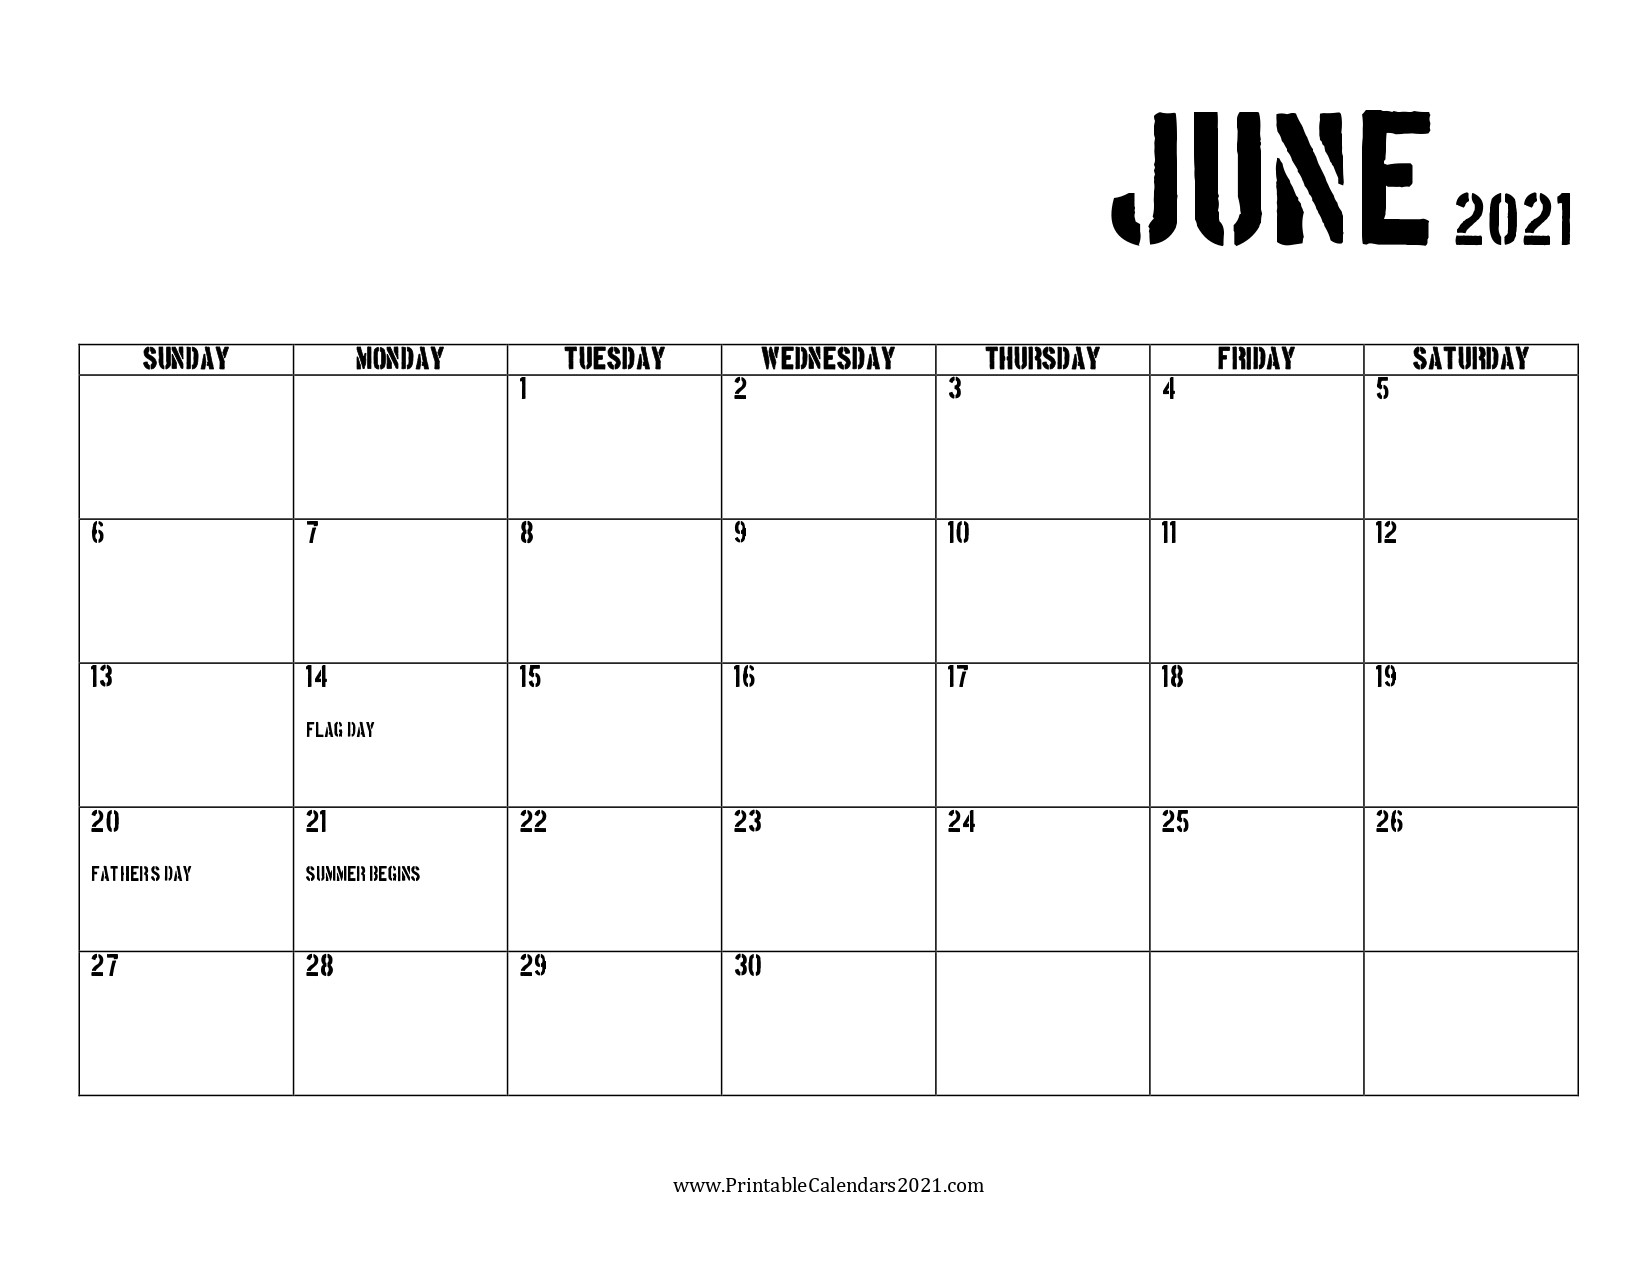 60+ Free June 2021 Calendar Printable With Holidays, Blank-2021 Blank Vacation Calendar